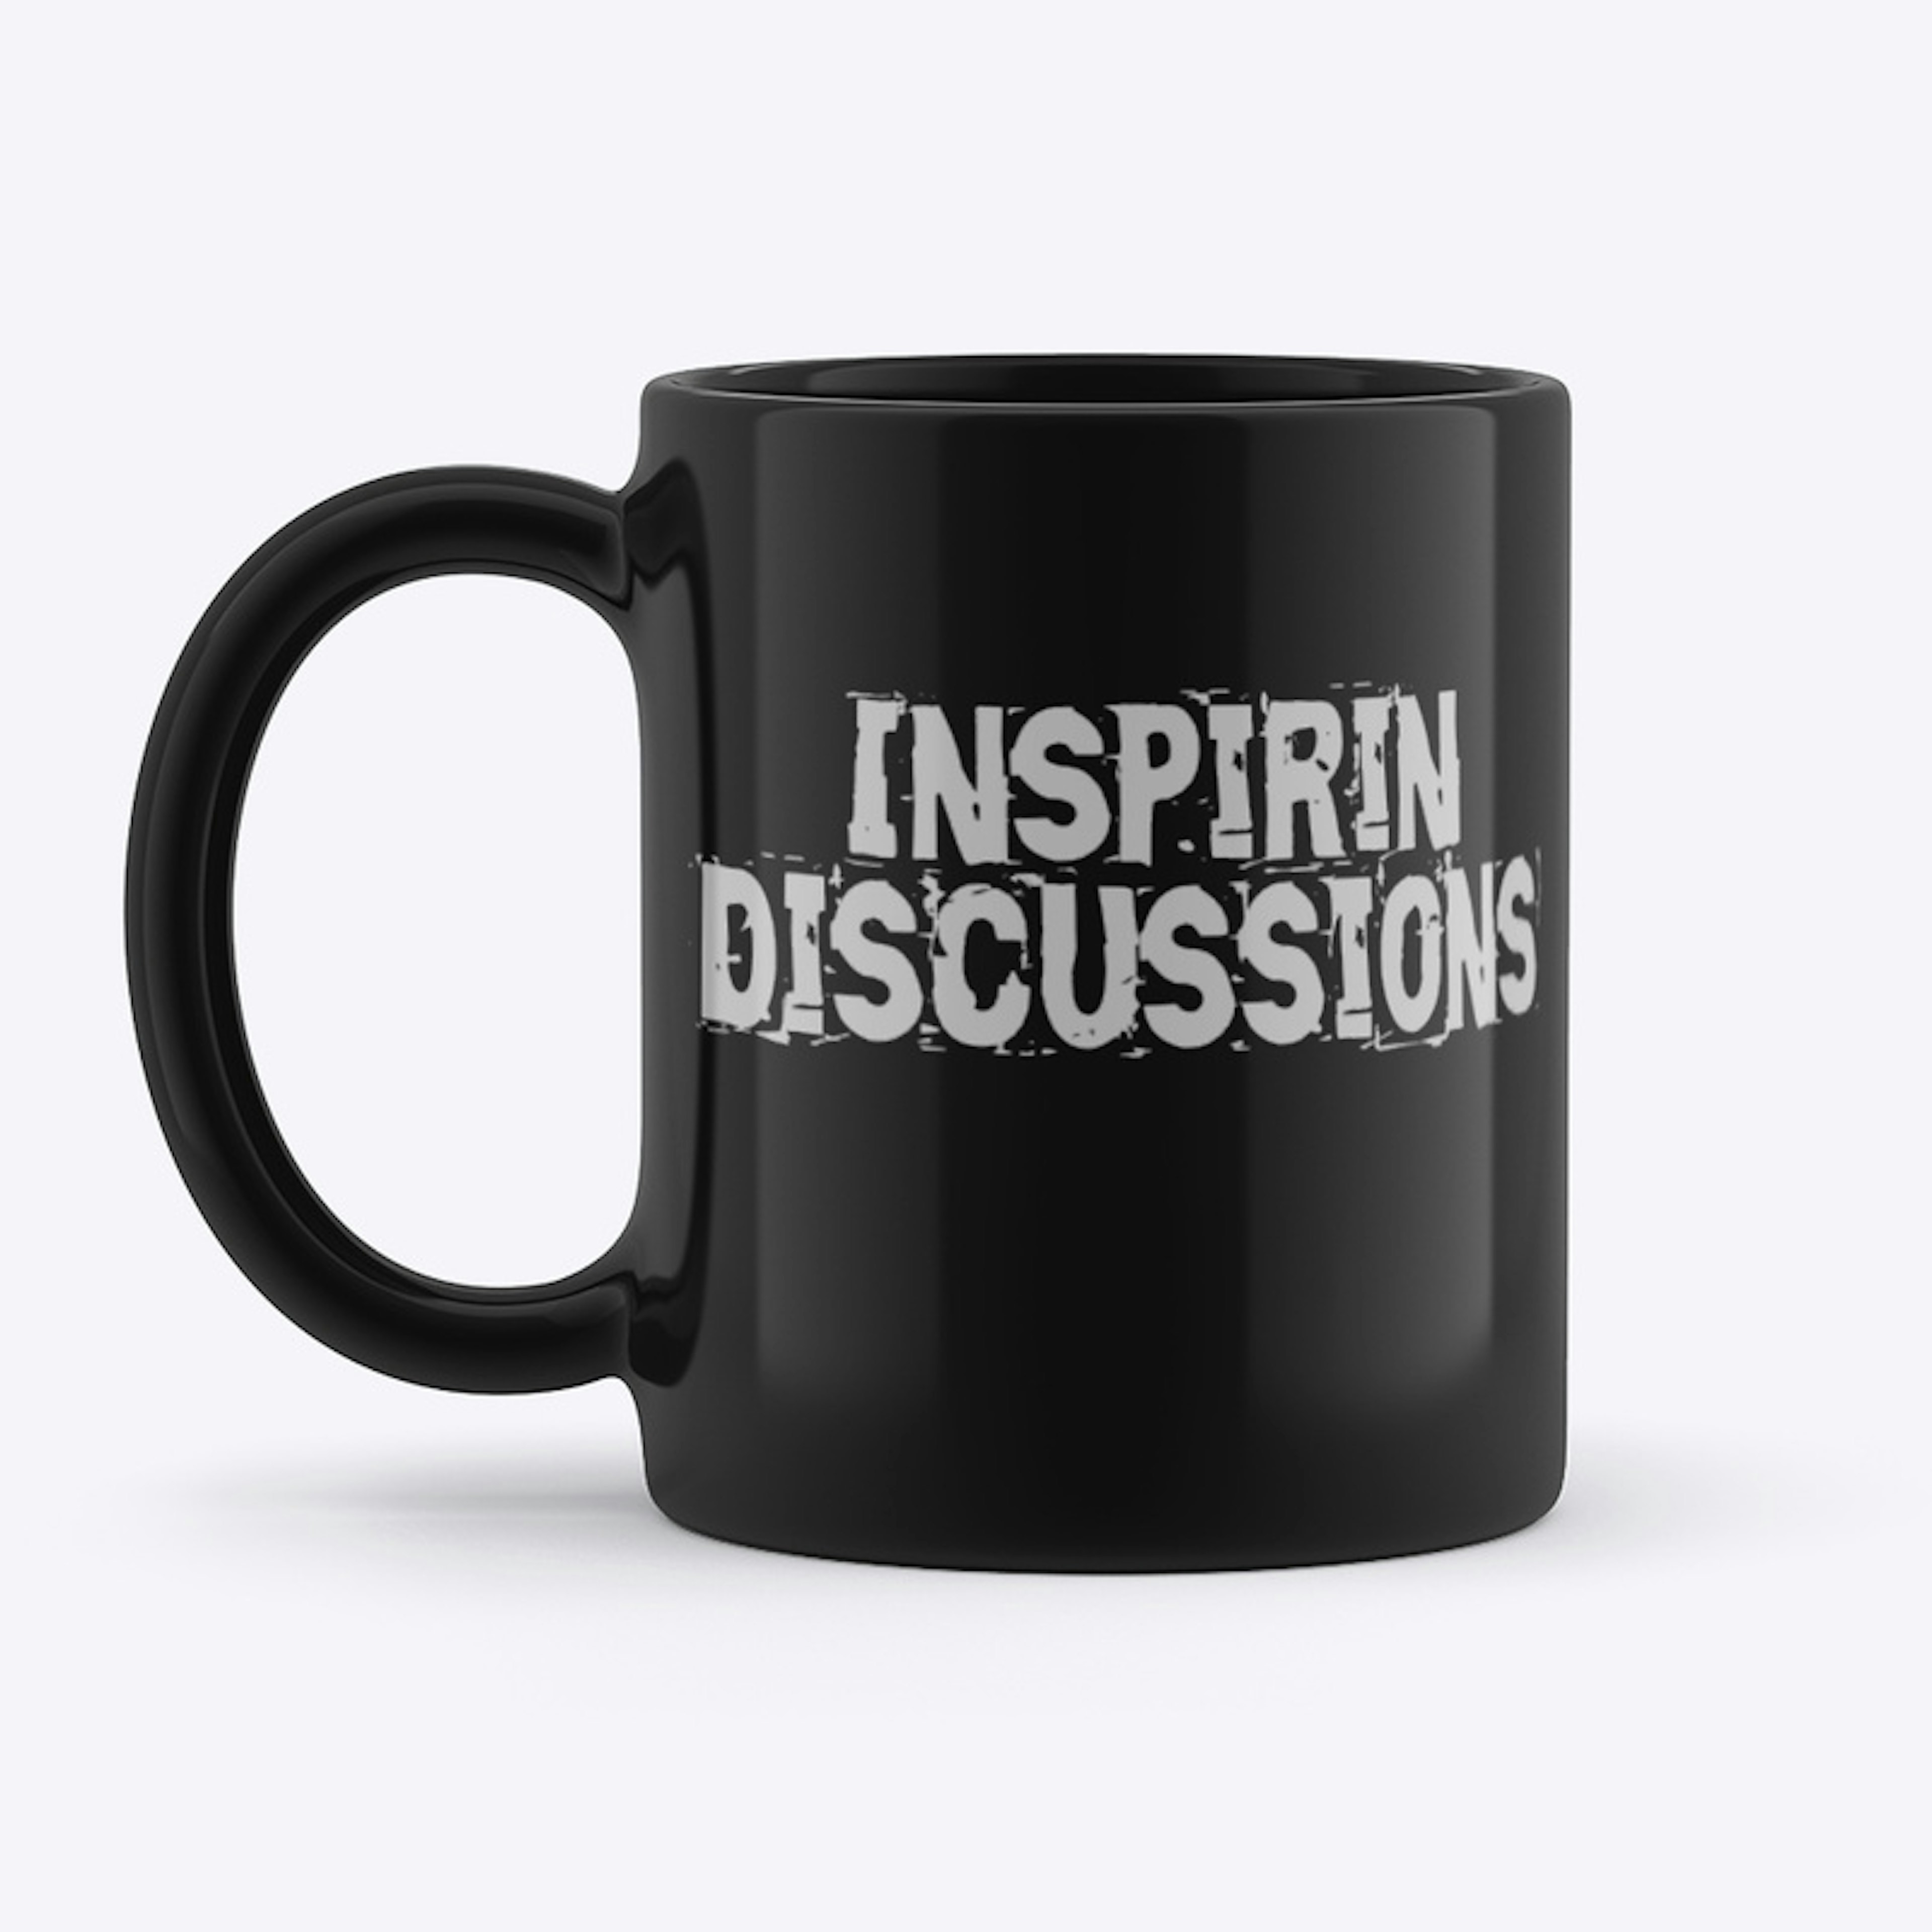 Inspirin Discussions Mug